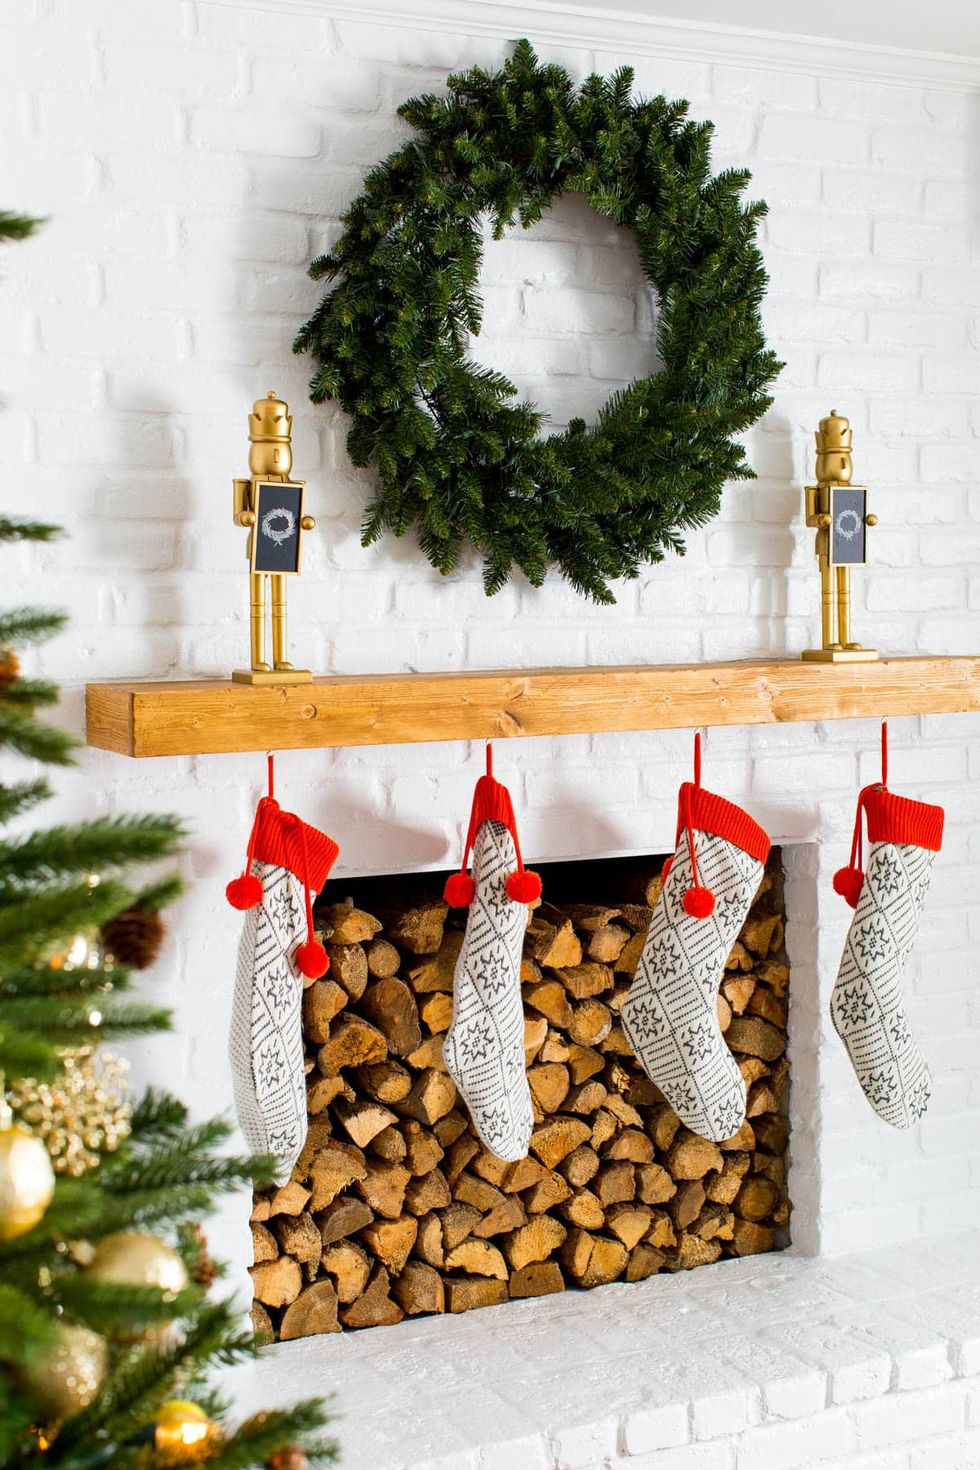 50 Trendy Christmas Mantel Fireplace Decor Ideas